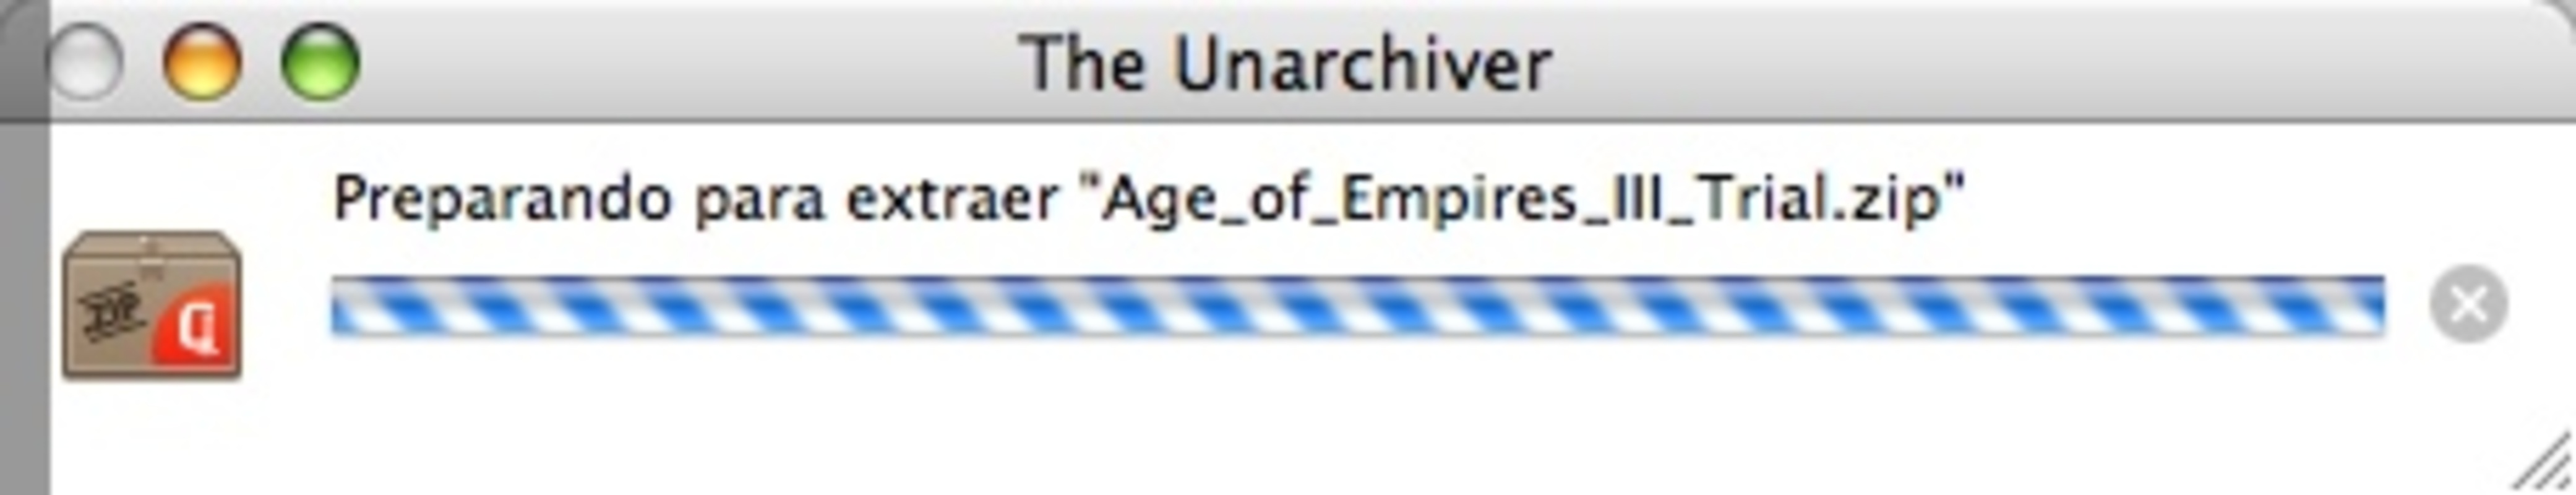 The Unarchiver 4.2.2 for Mac Screenshot 1